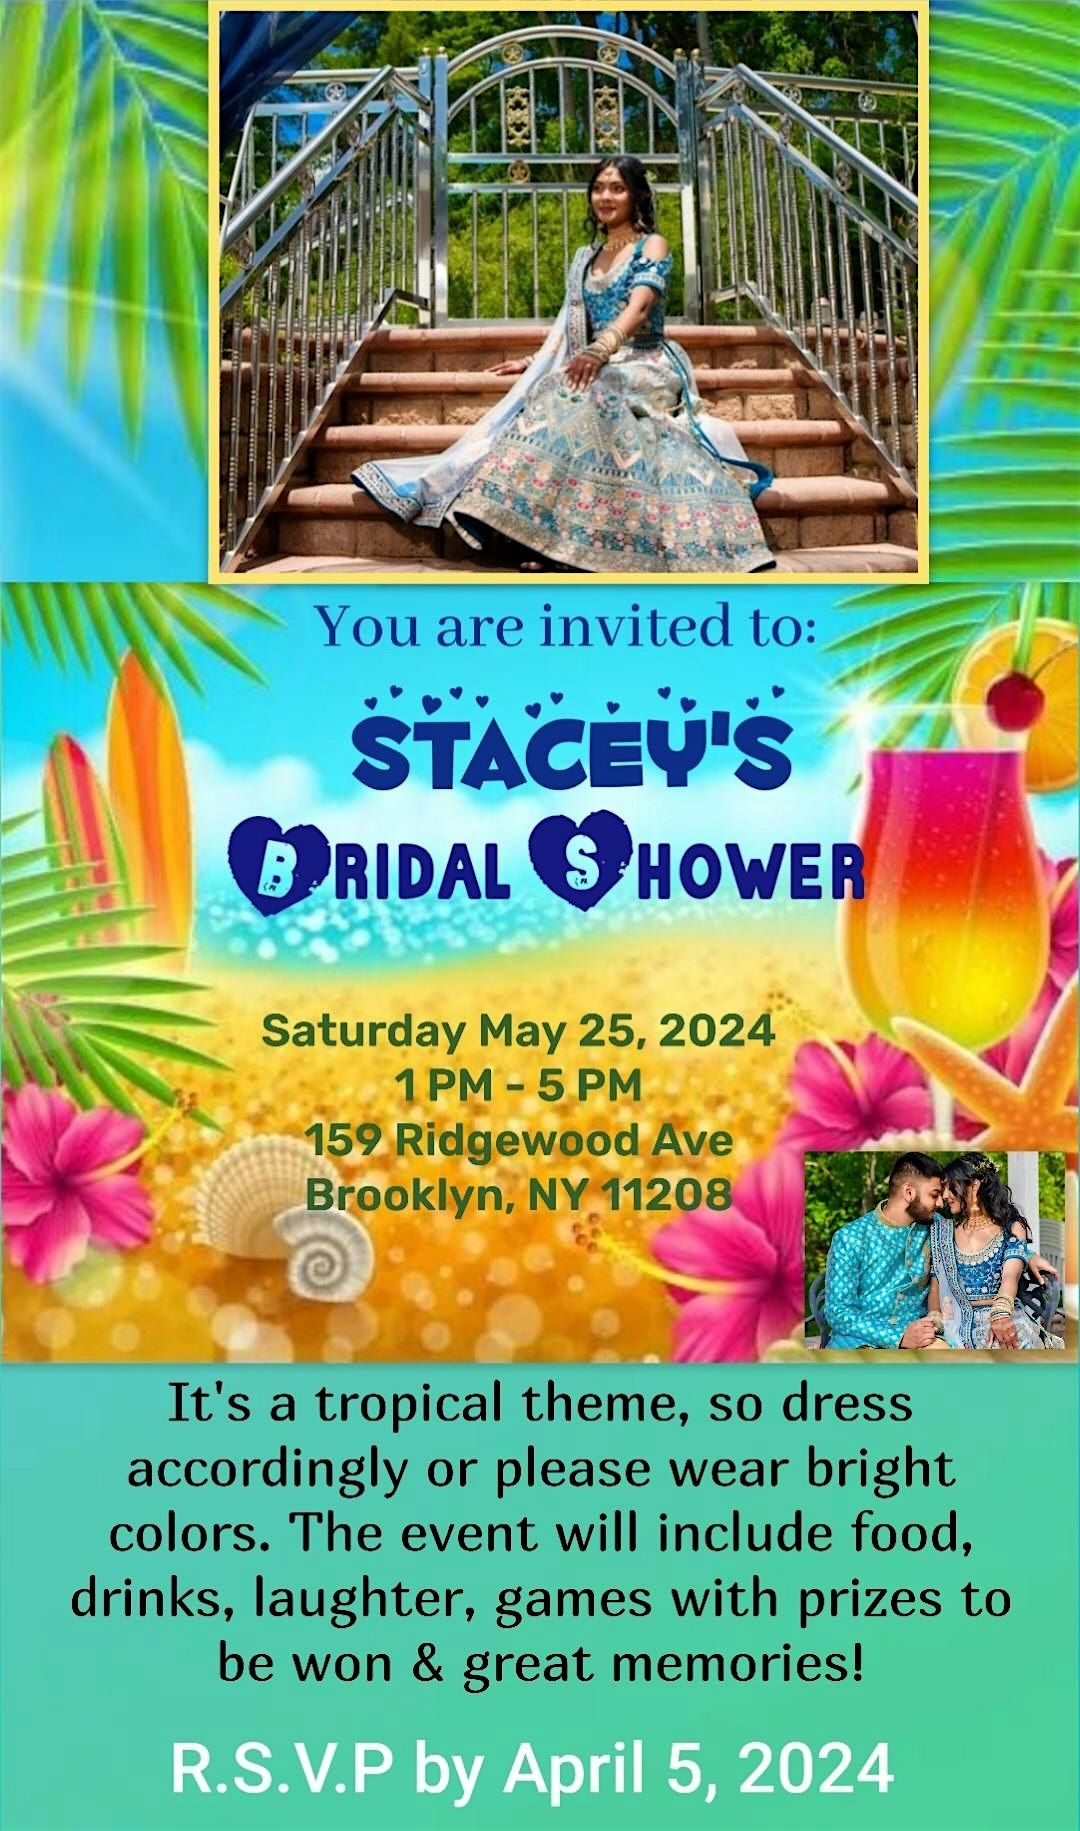 Stacey's Bridal Shower, RSVP by April 5, 2024